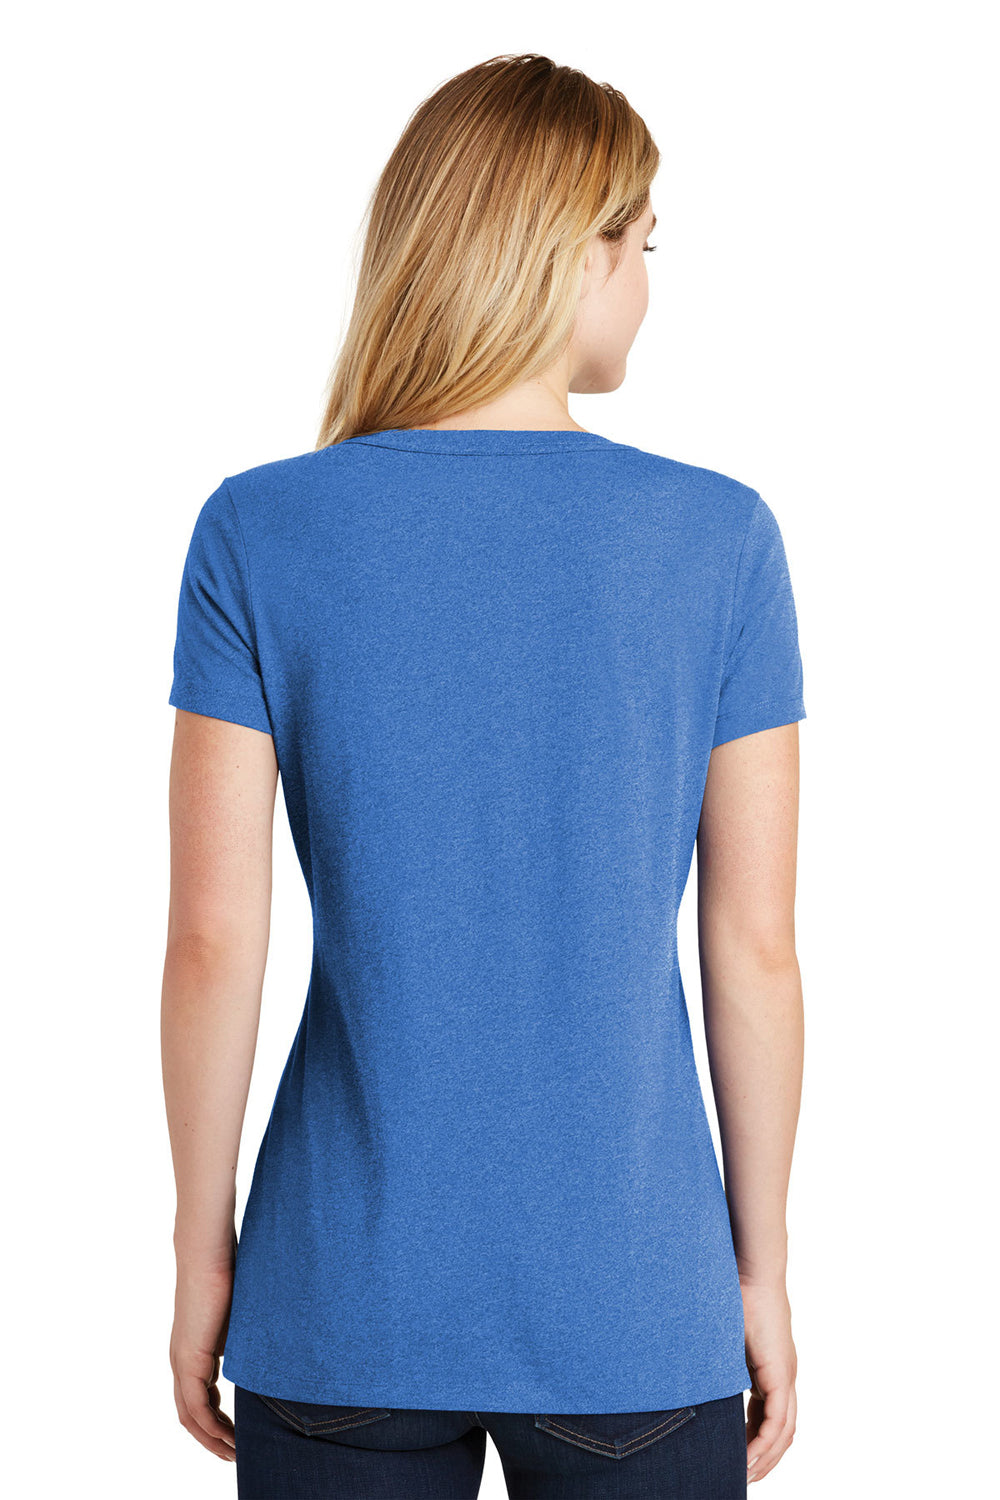 New Era LNEA101 Womens Heritage Short Sleeve V-Neck T-Shirt Heather Royal Blue Back